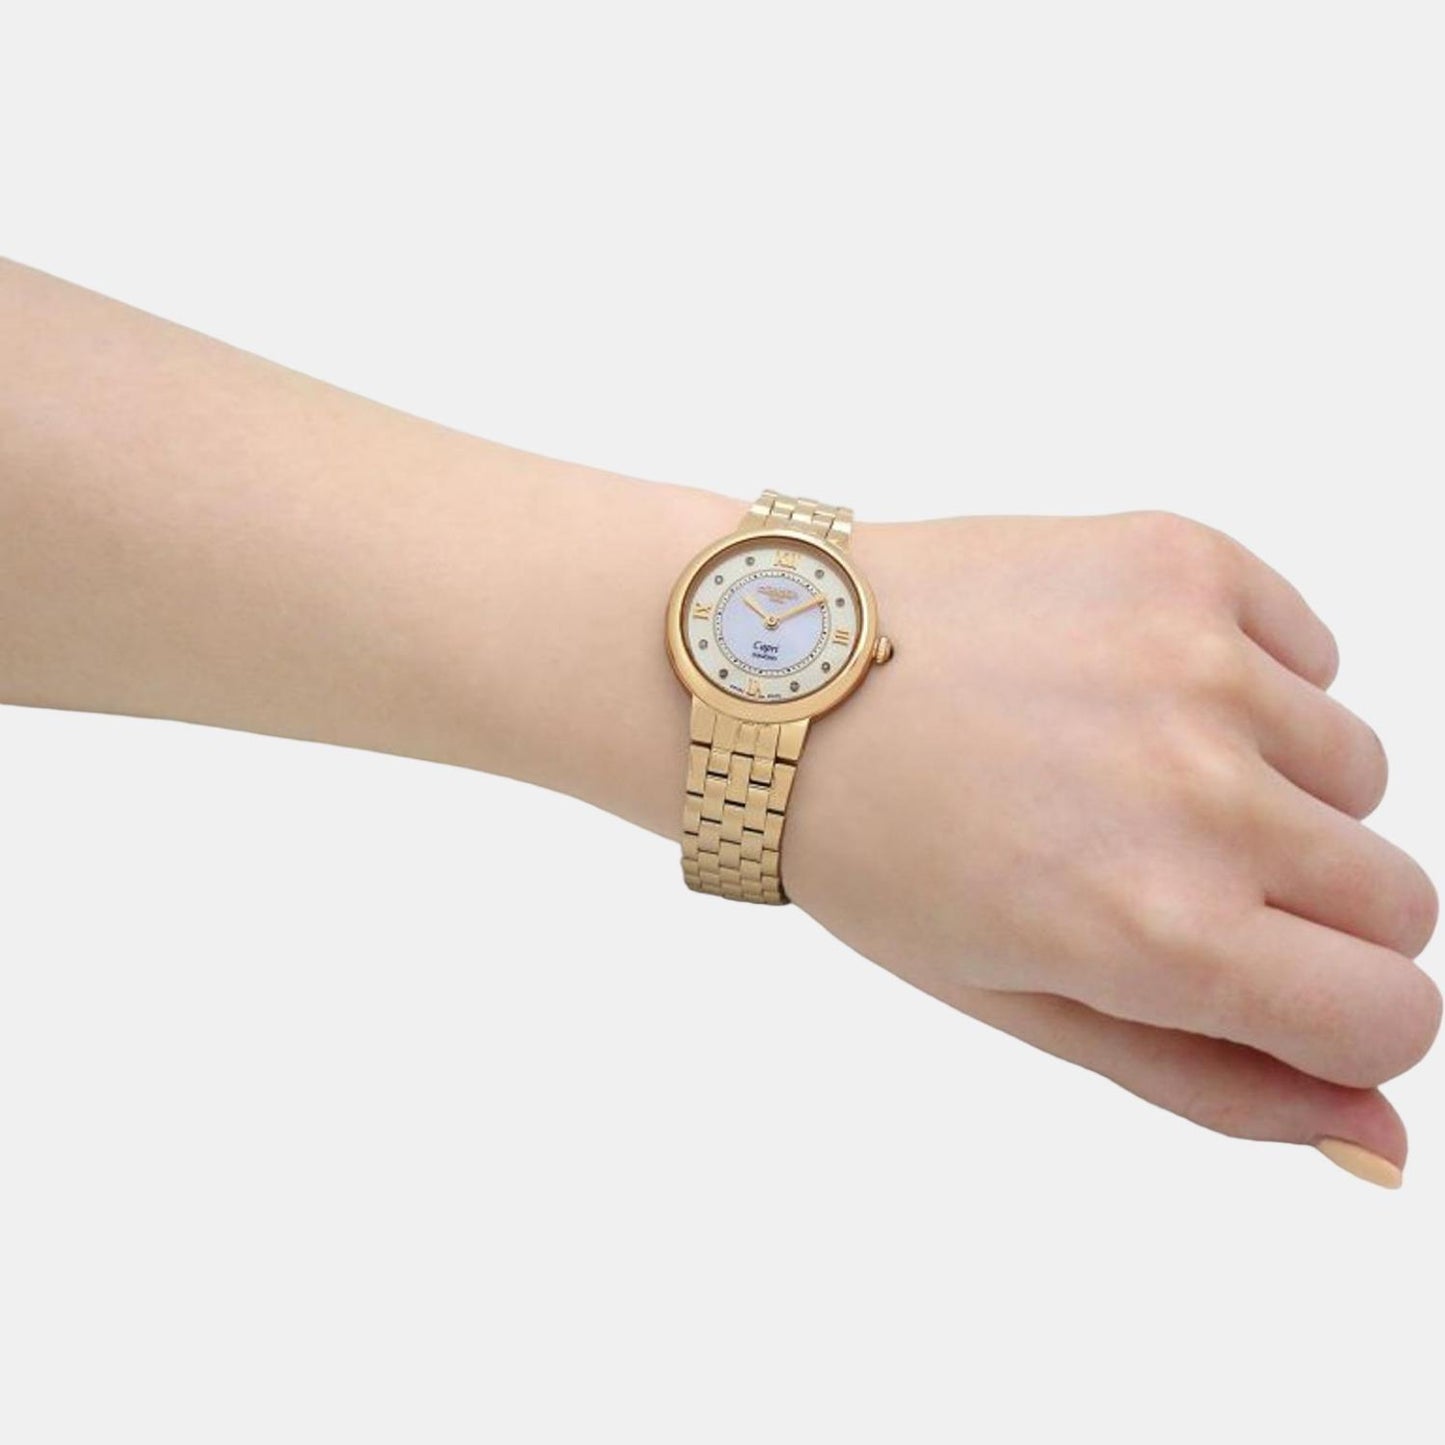 roamer-plated-stainless-steel-white-analog-women-watch-859845-48-29-50